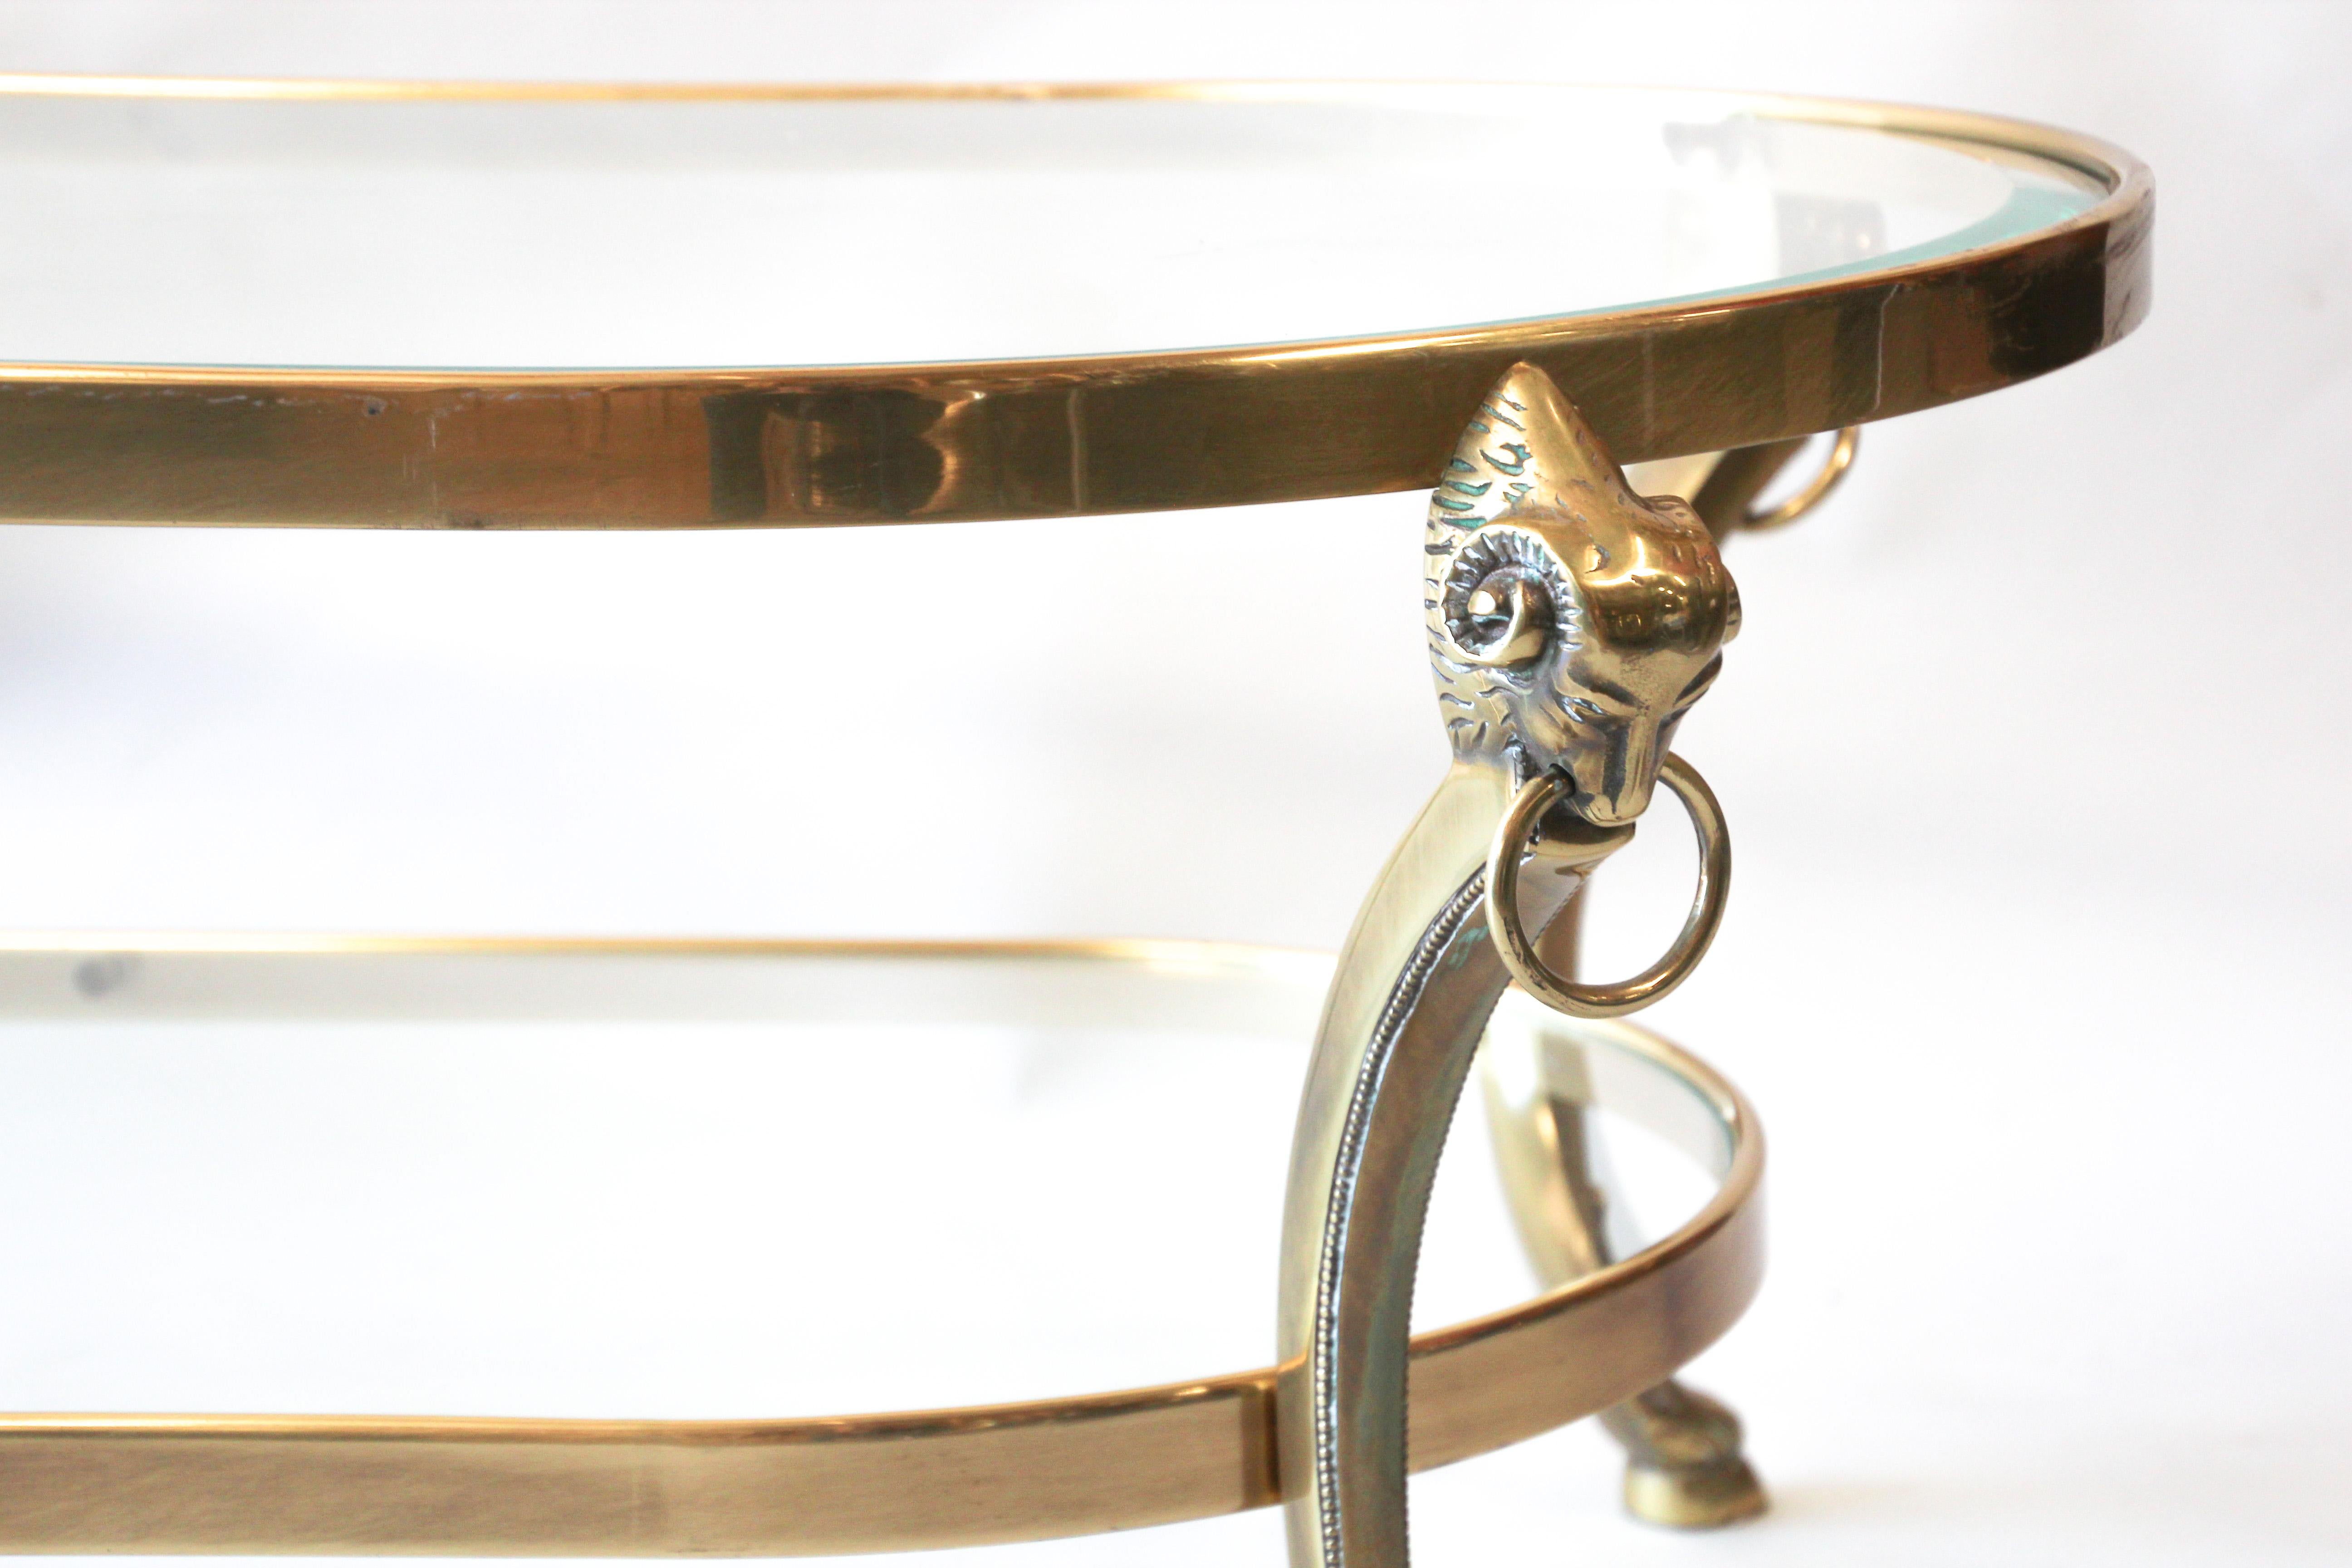 Polished Oval Italian Brass Coffee Table with Ram's Head, circa 1970